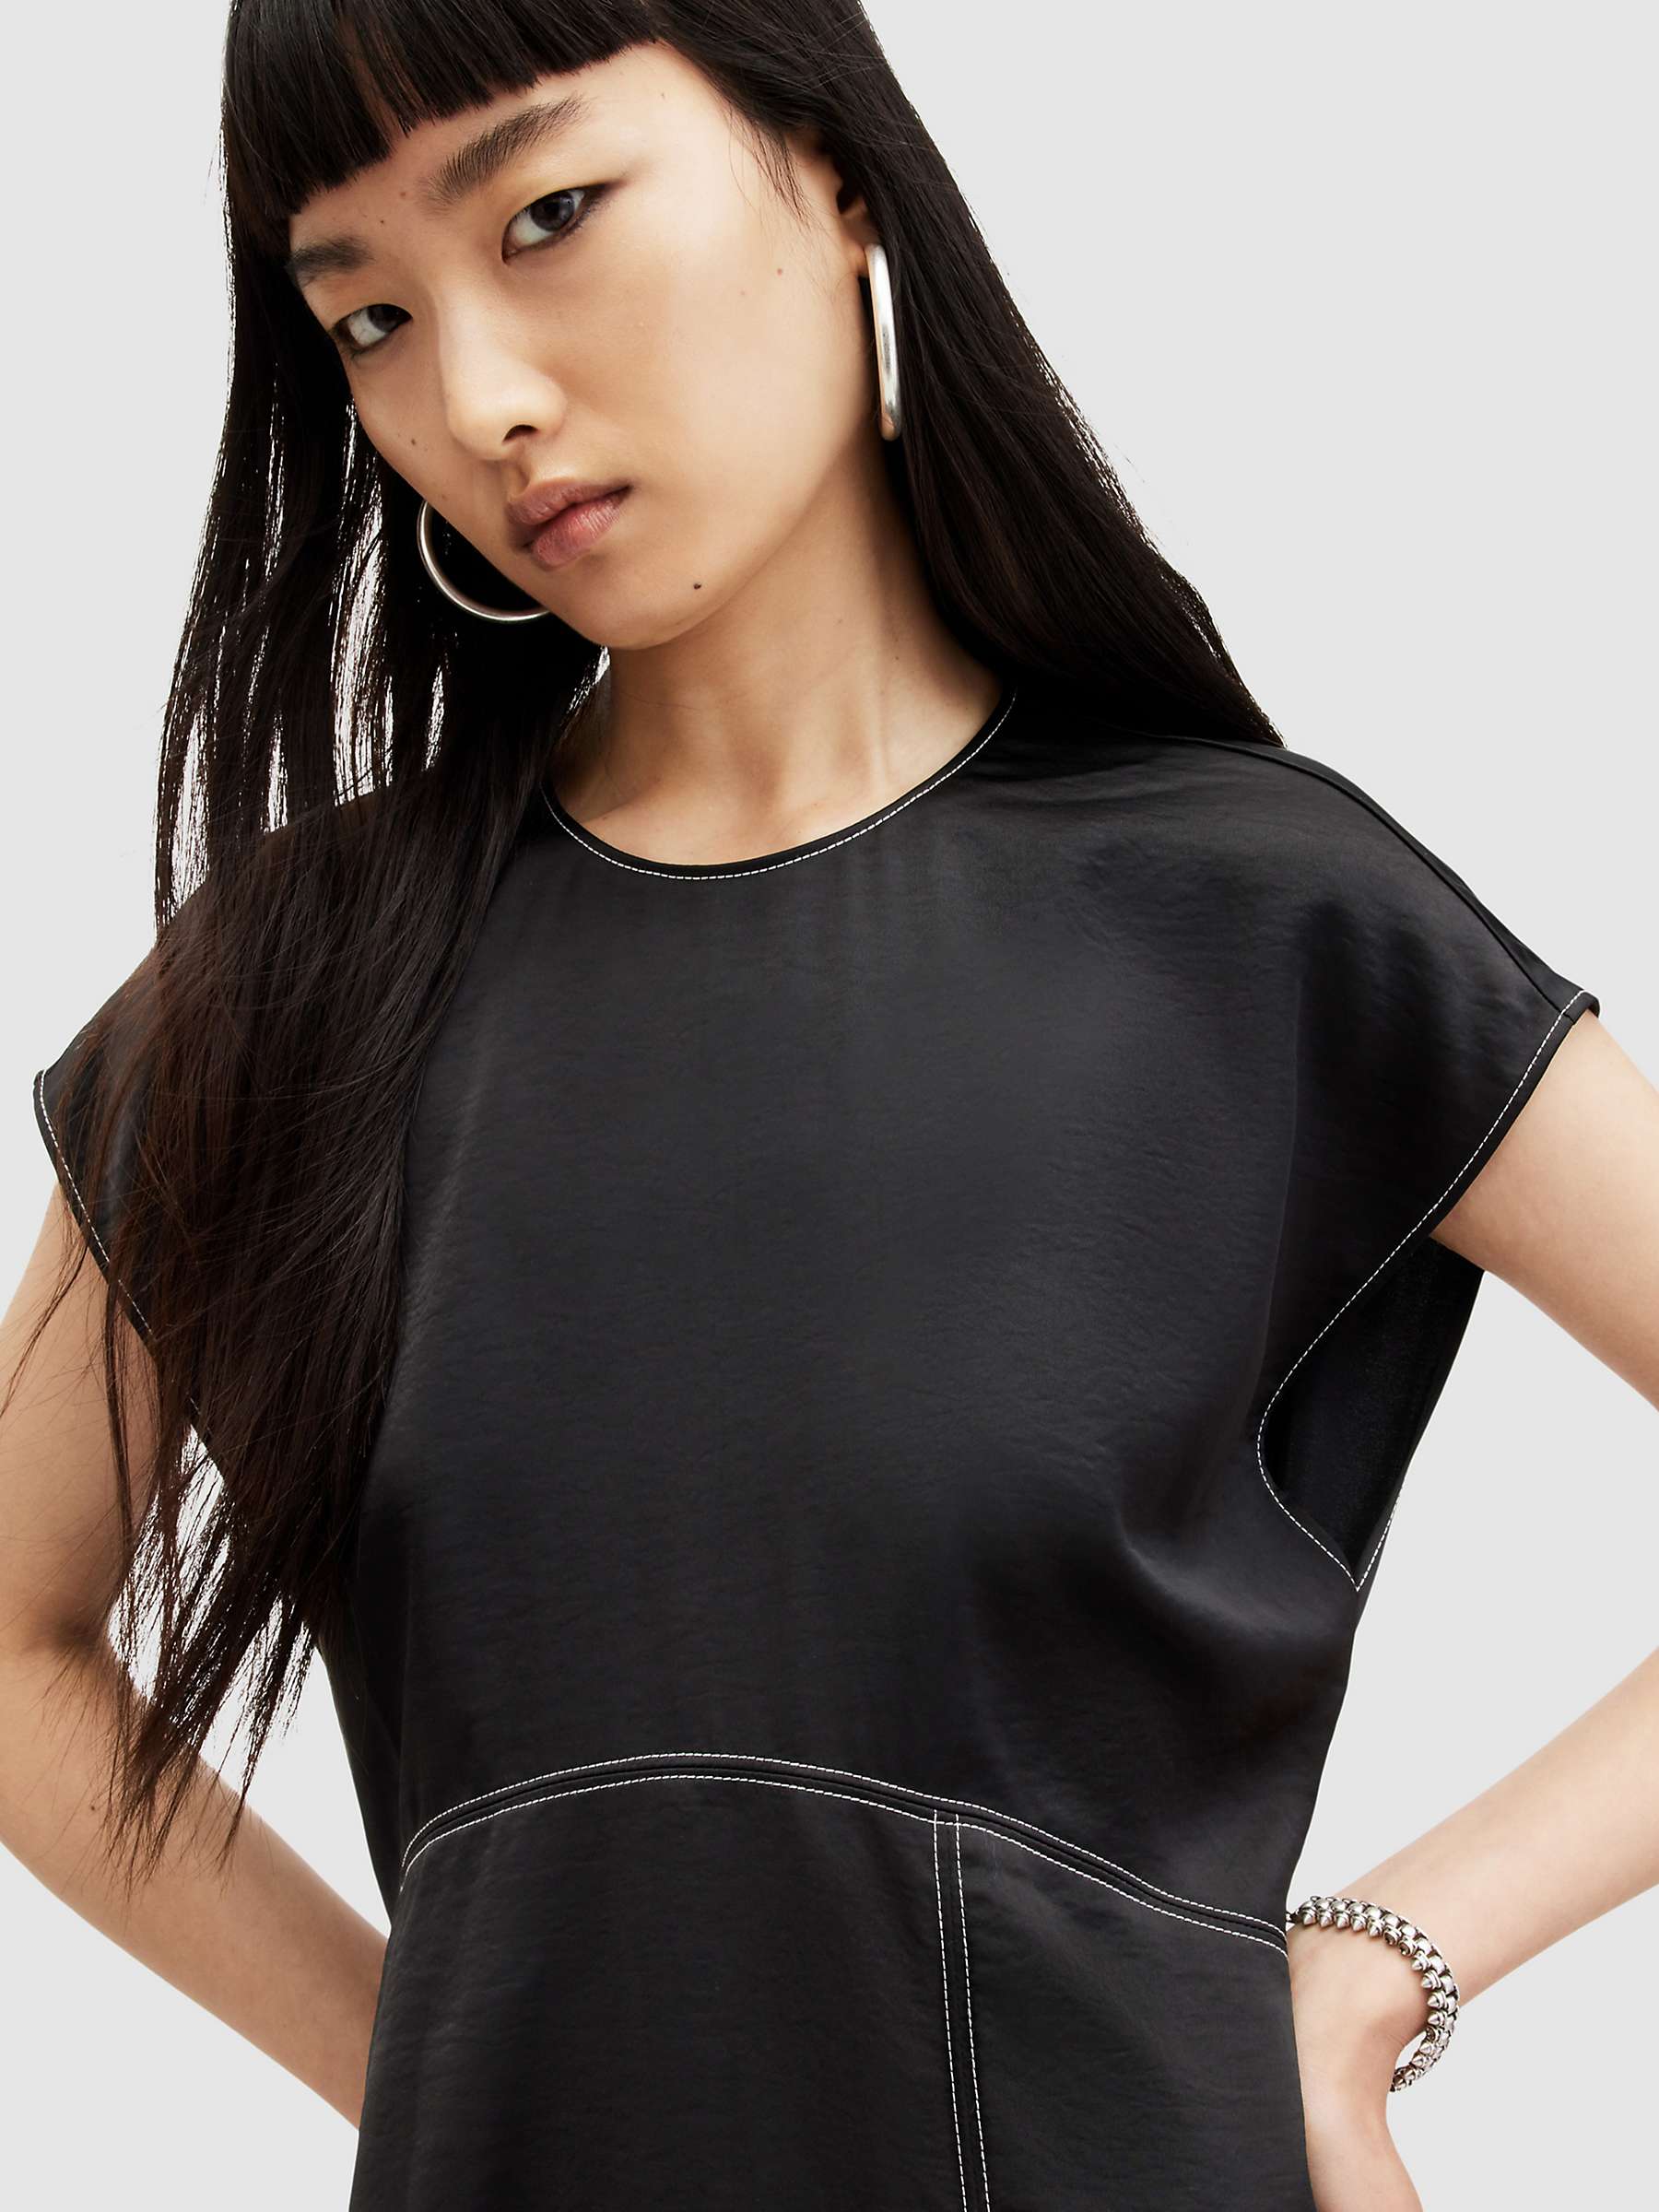 Buy AllSaints Agnes Panelled Asymmetric Midi Dress, Black Online at johnlewis.com